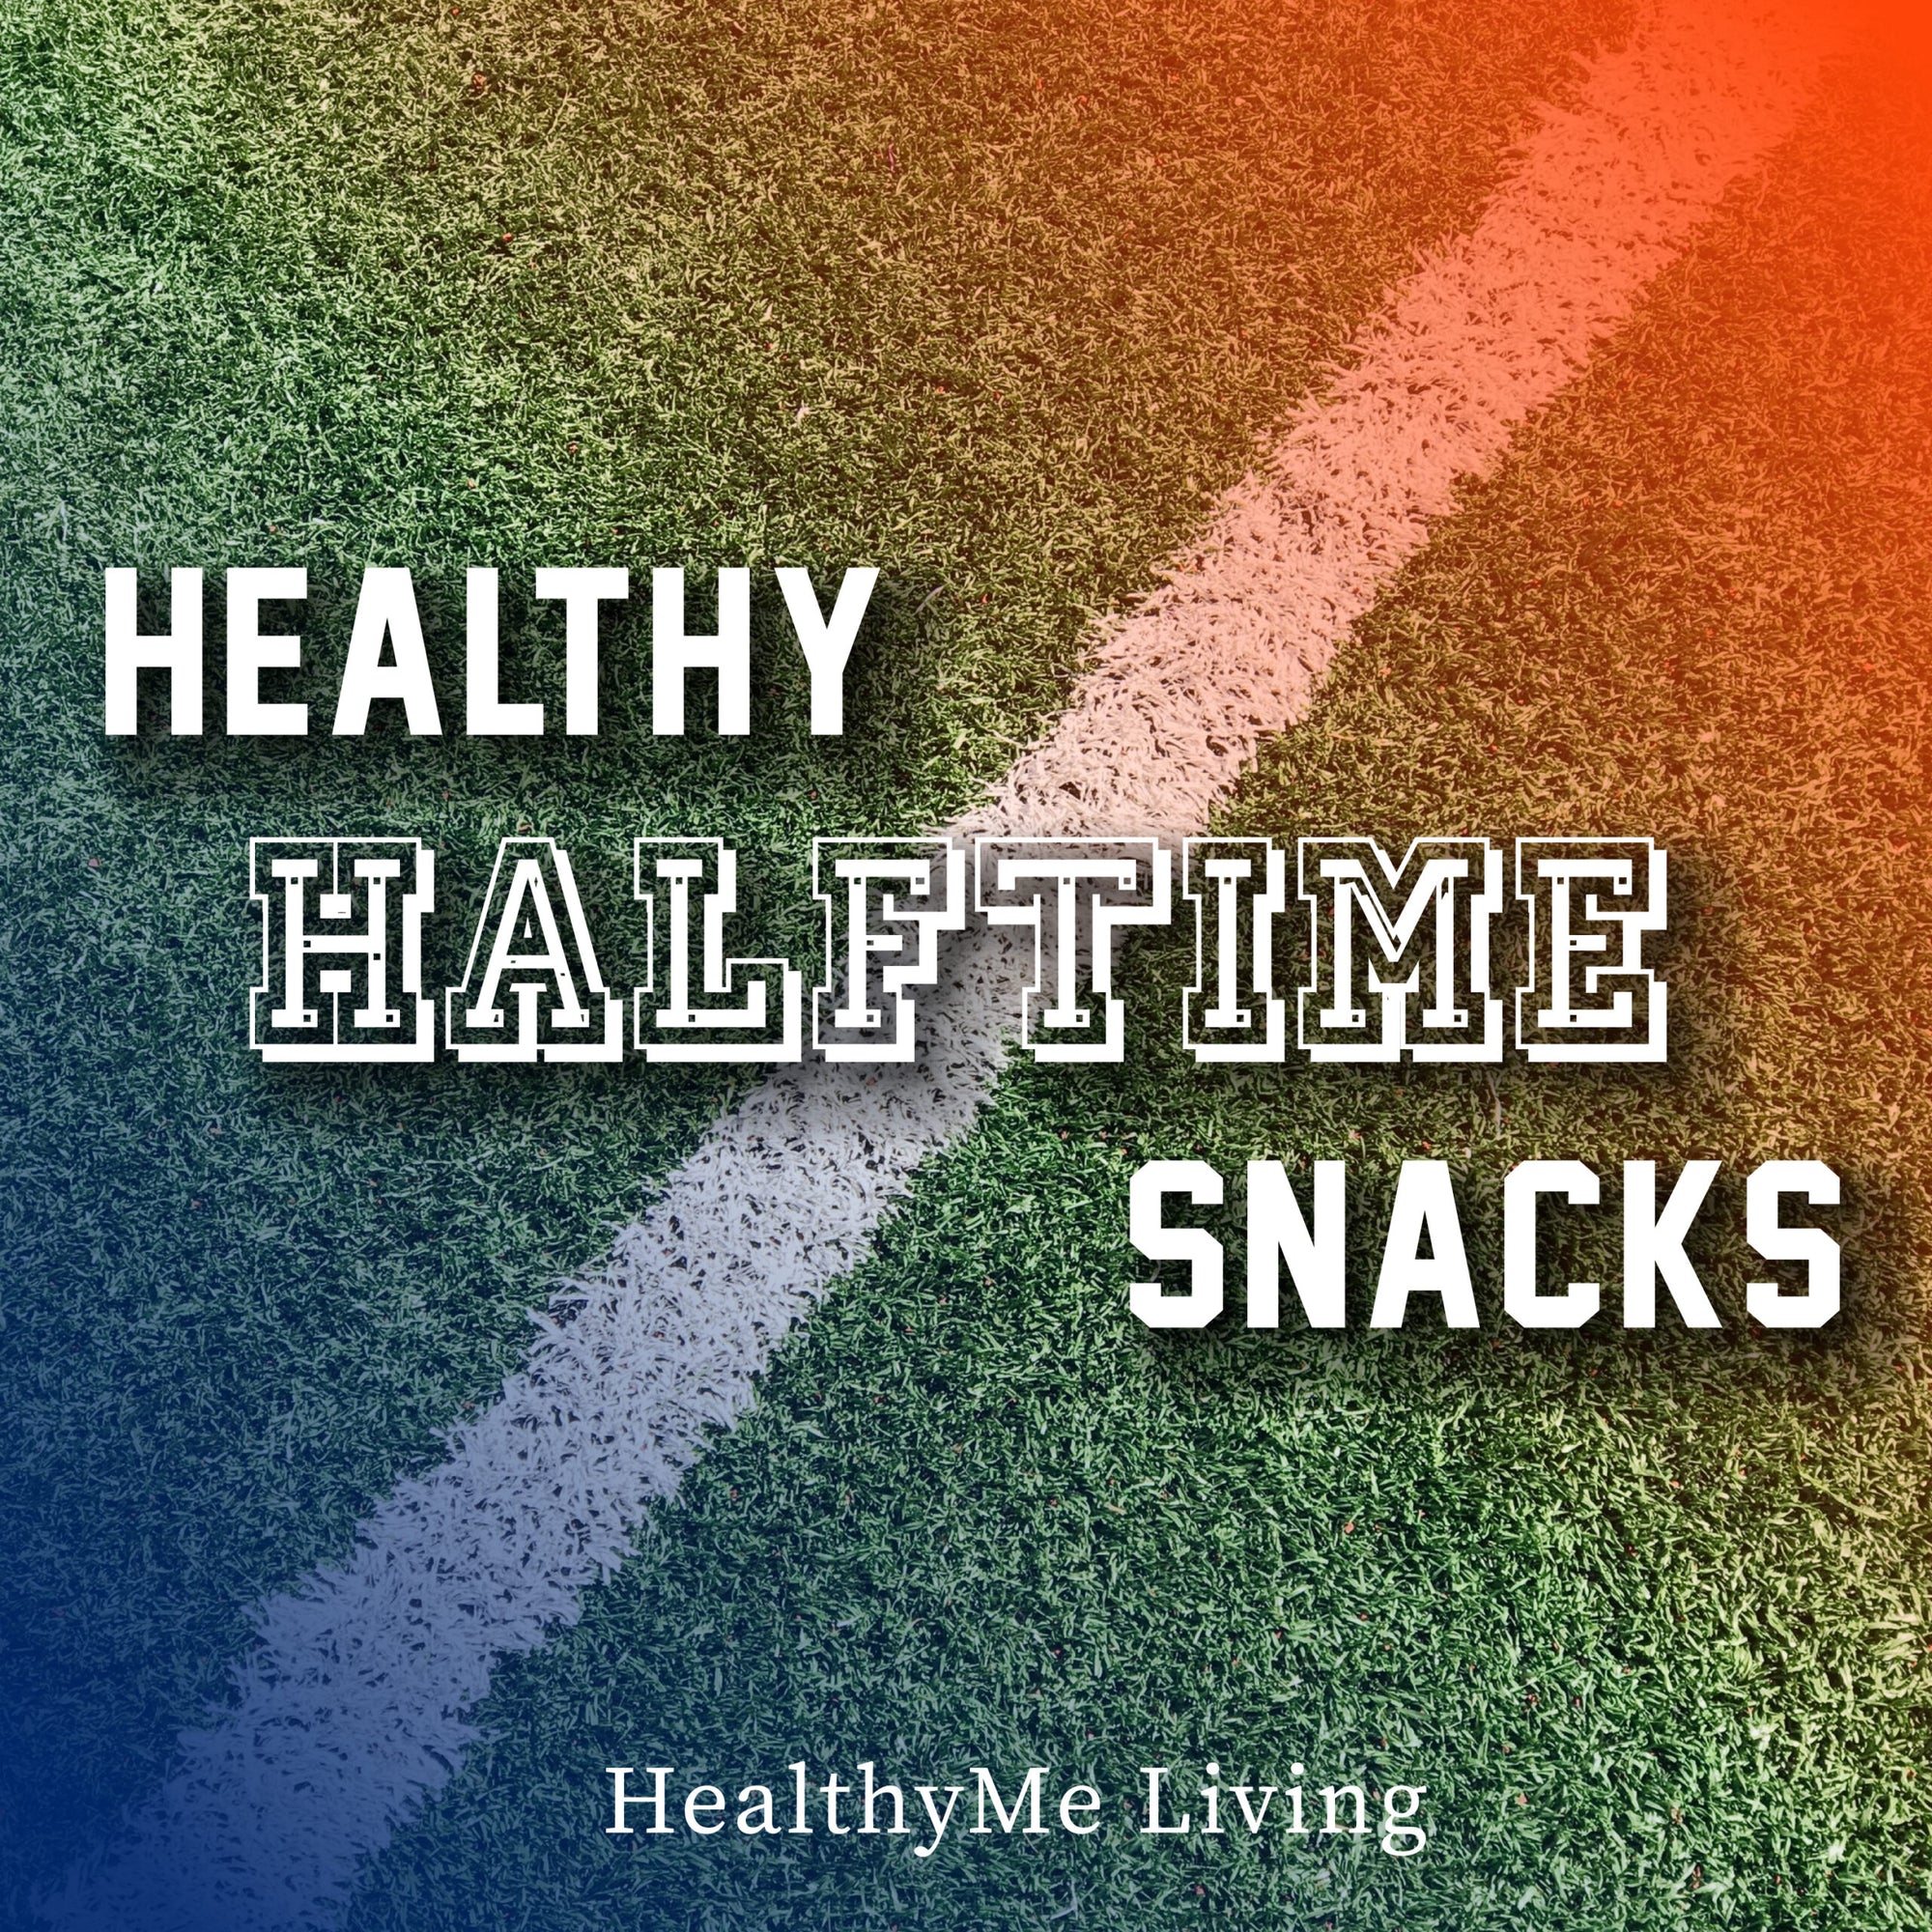 Healthy Halftime Snacks